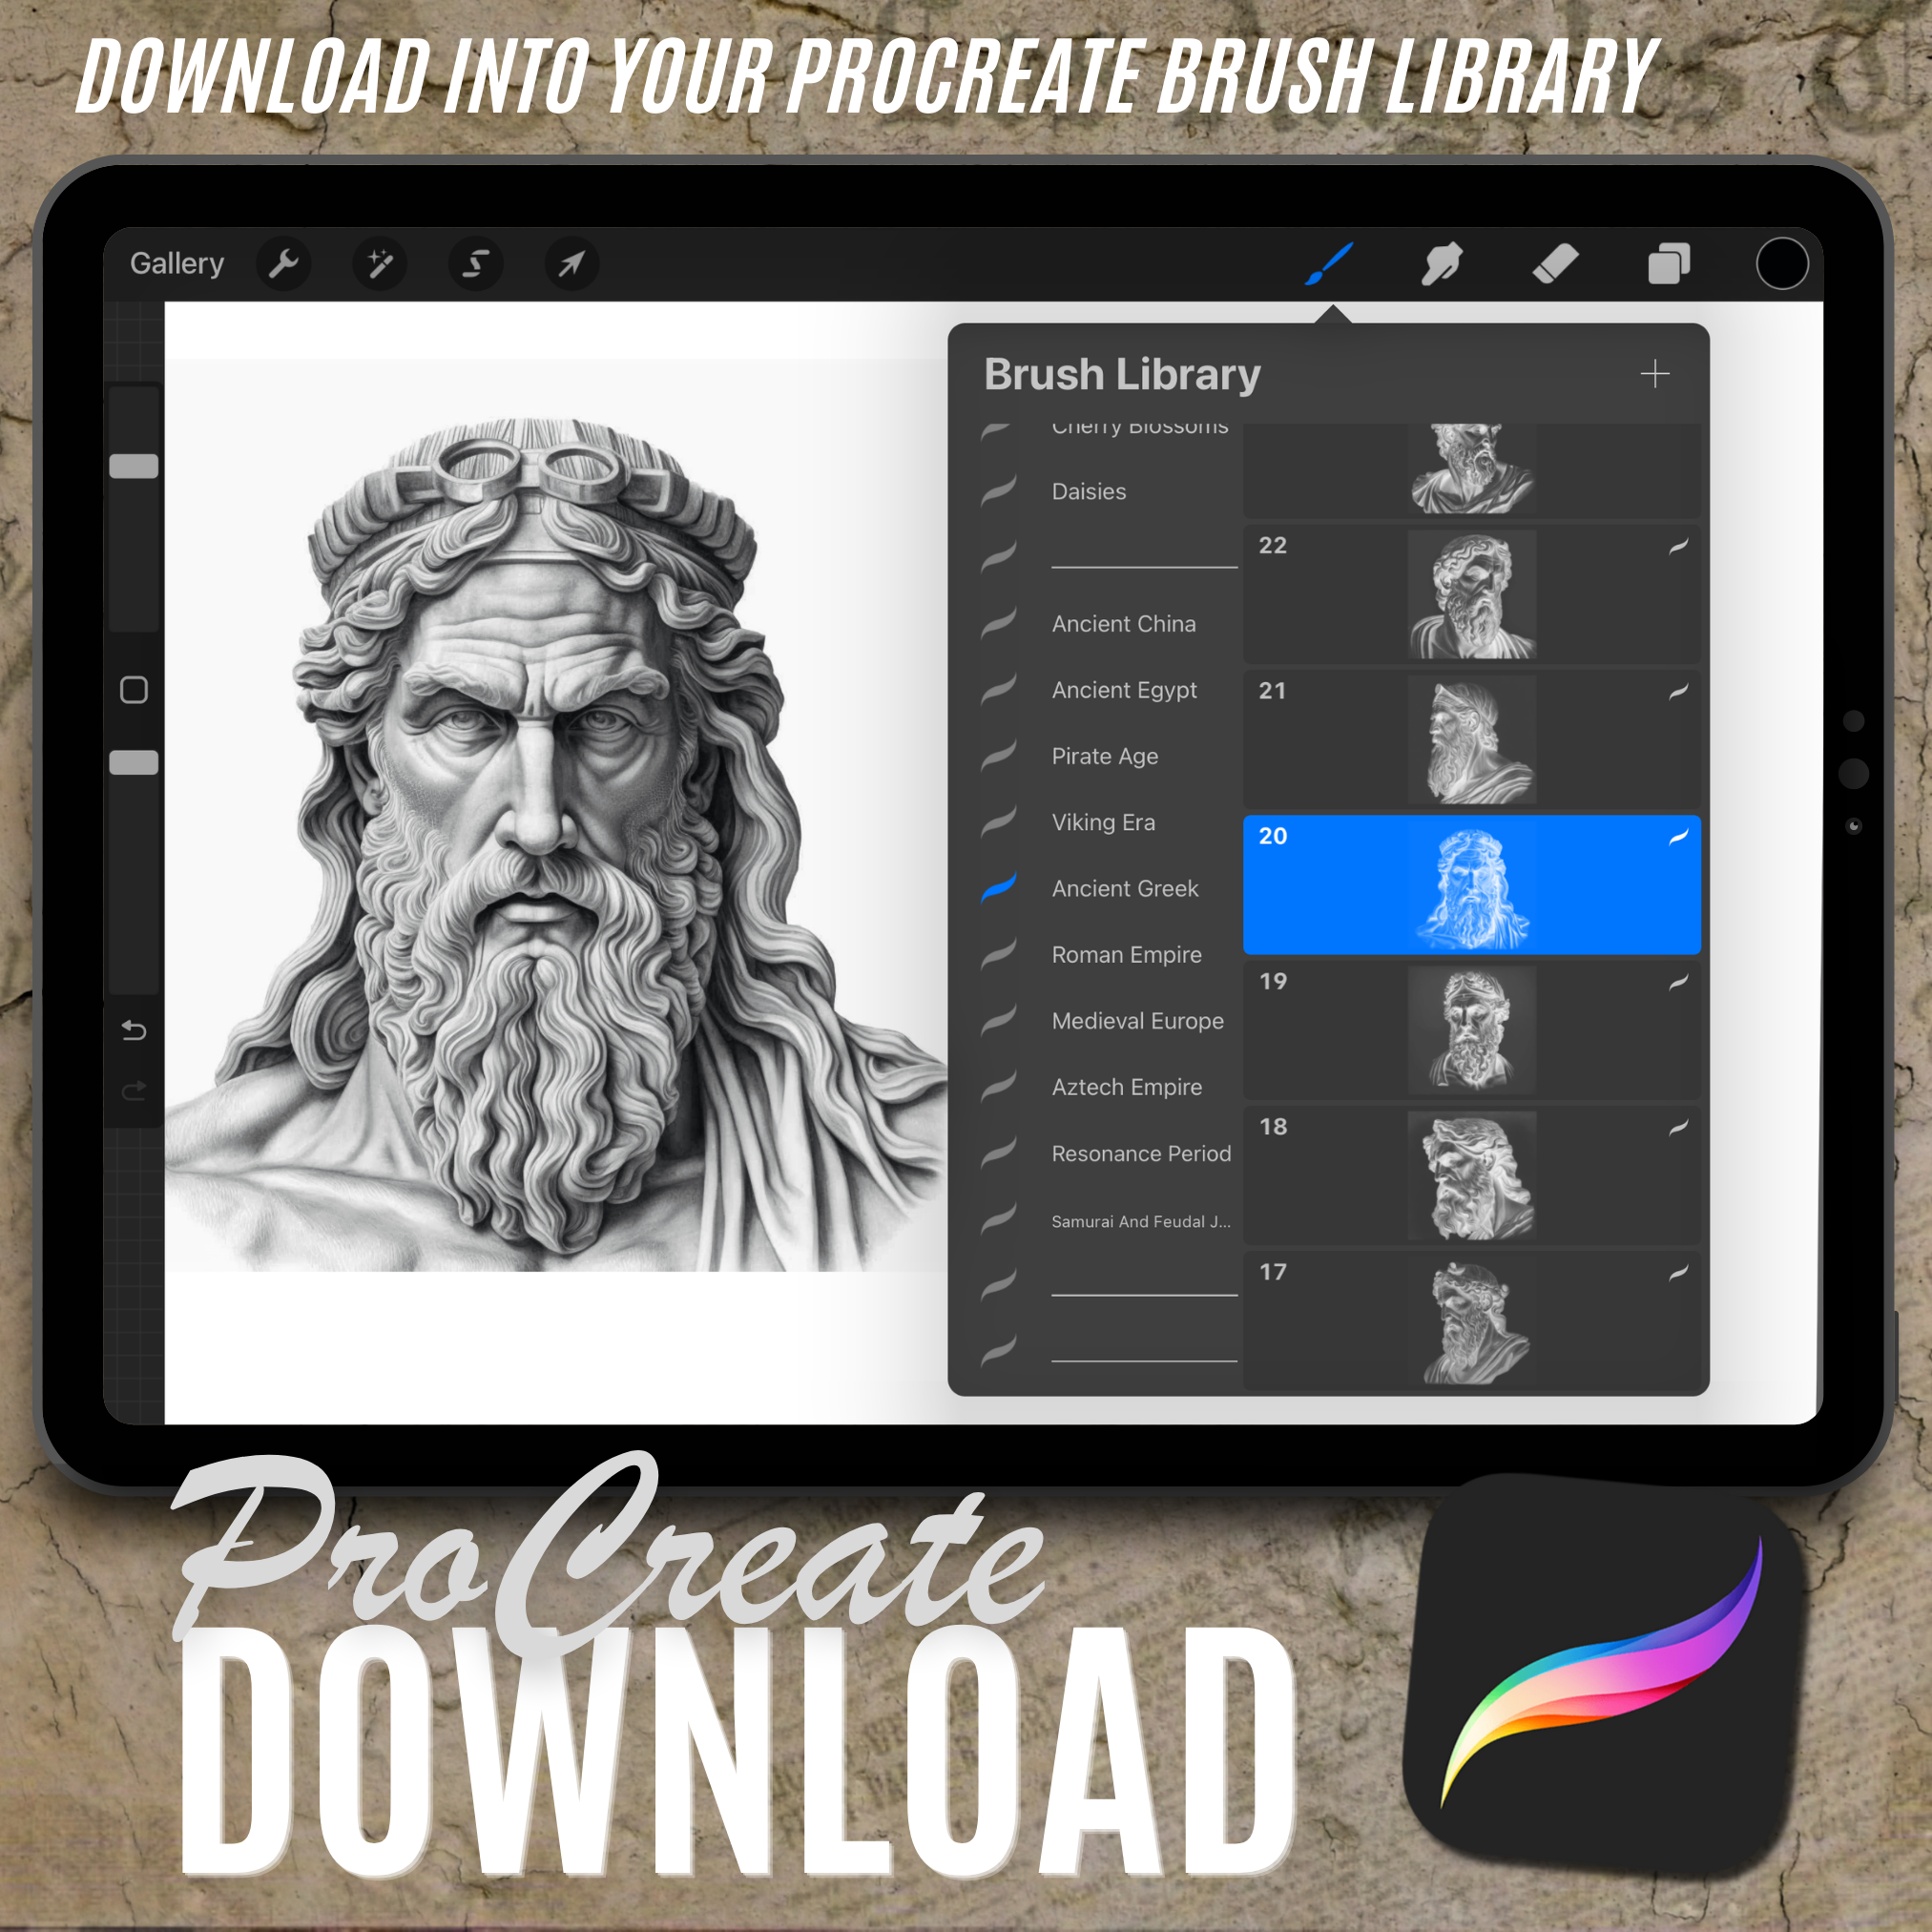 Ancient Greece Digital Design Collection: 100 Procreate & Sketchbook Images